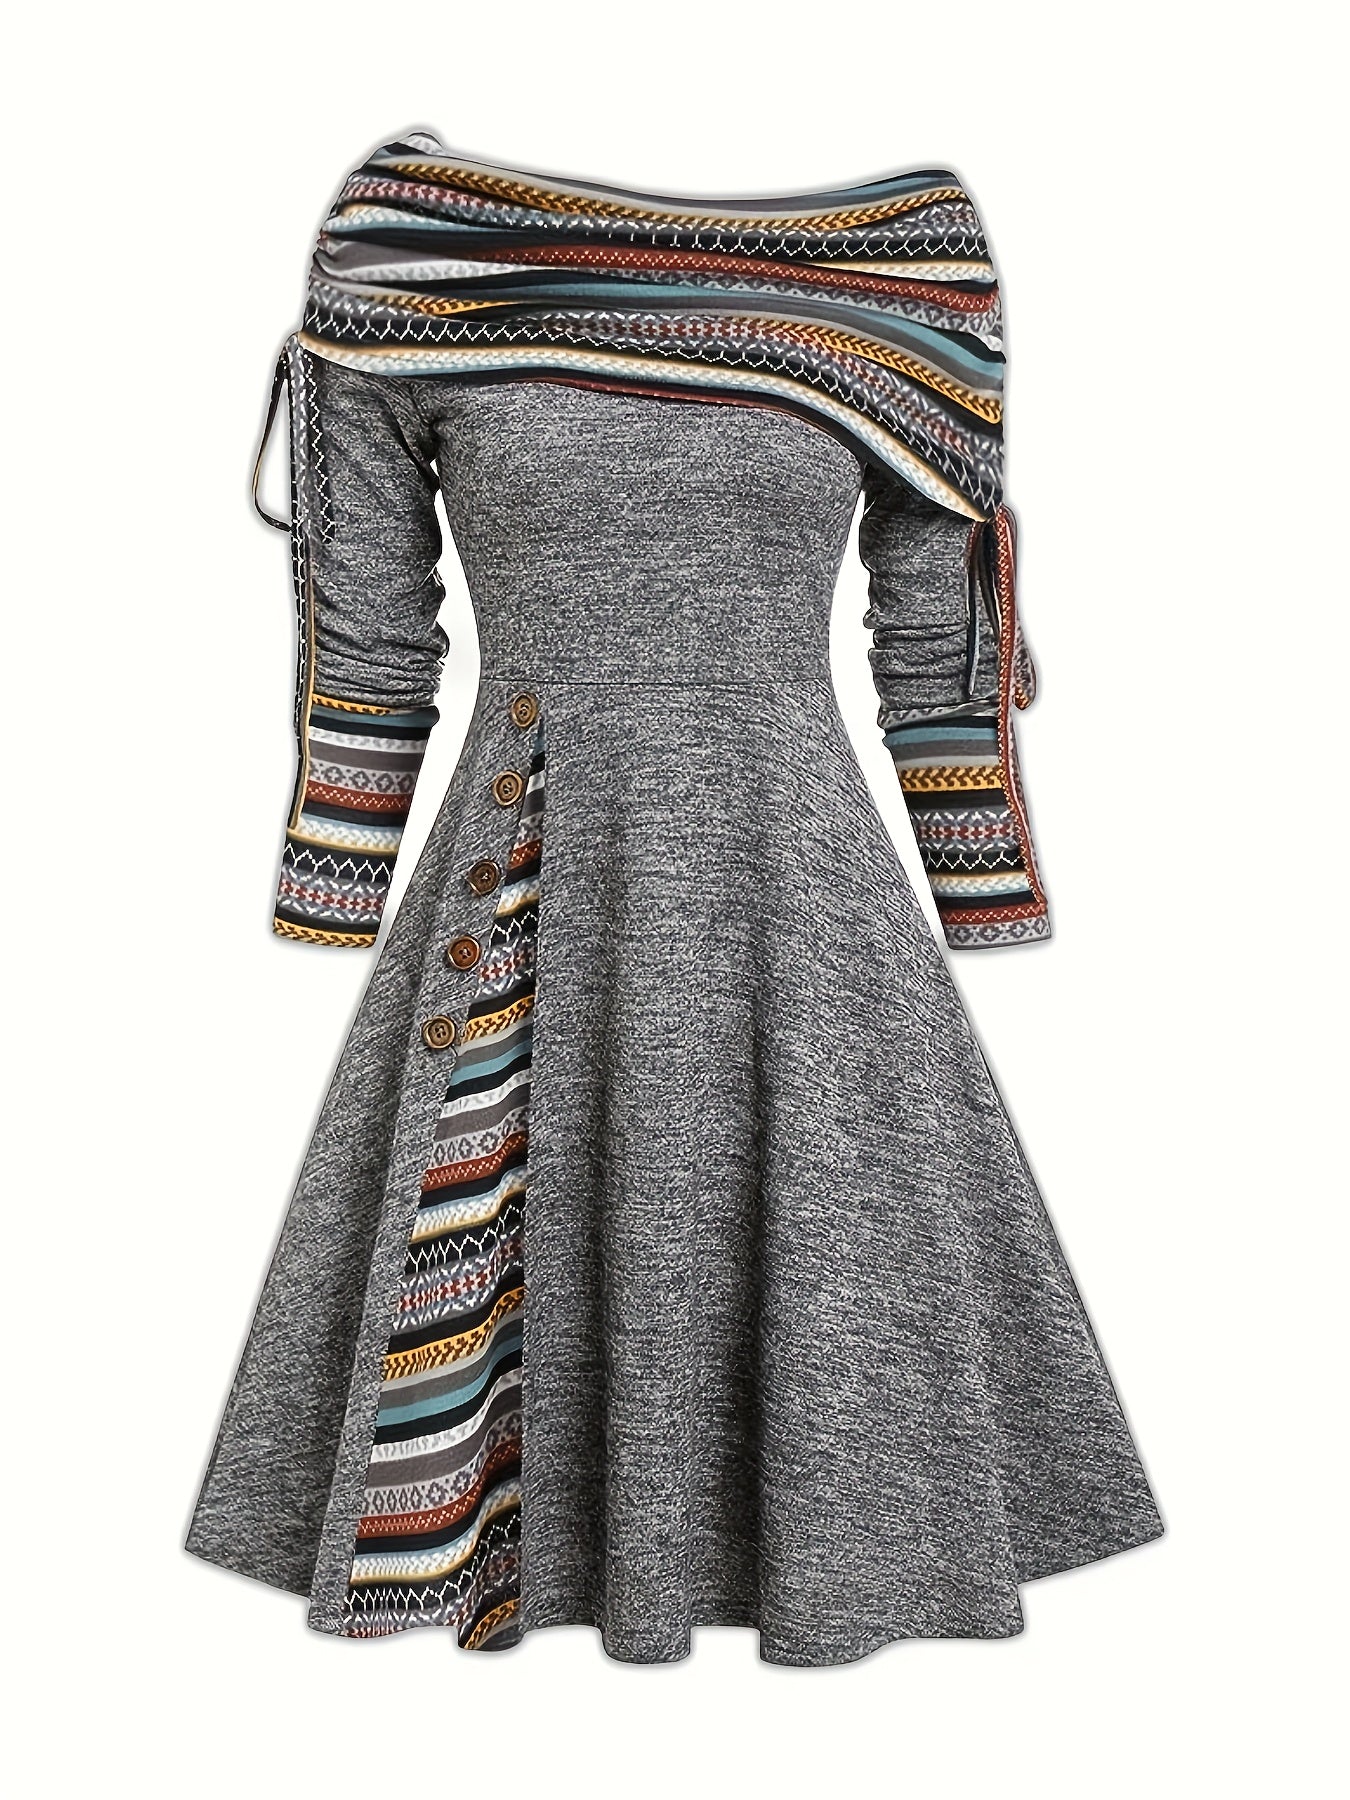 Antmvs Ethnic Print Drawstring Aline Dress, Vintage Off Shoulder Button Decor Dress For Spring & Fall, Women's Clothing